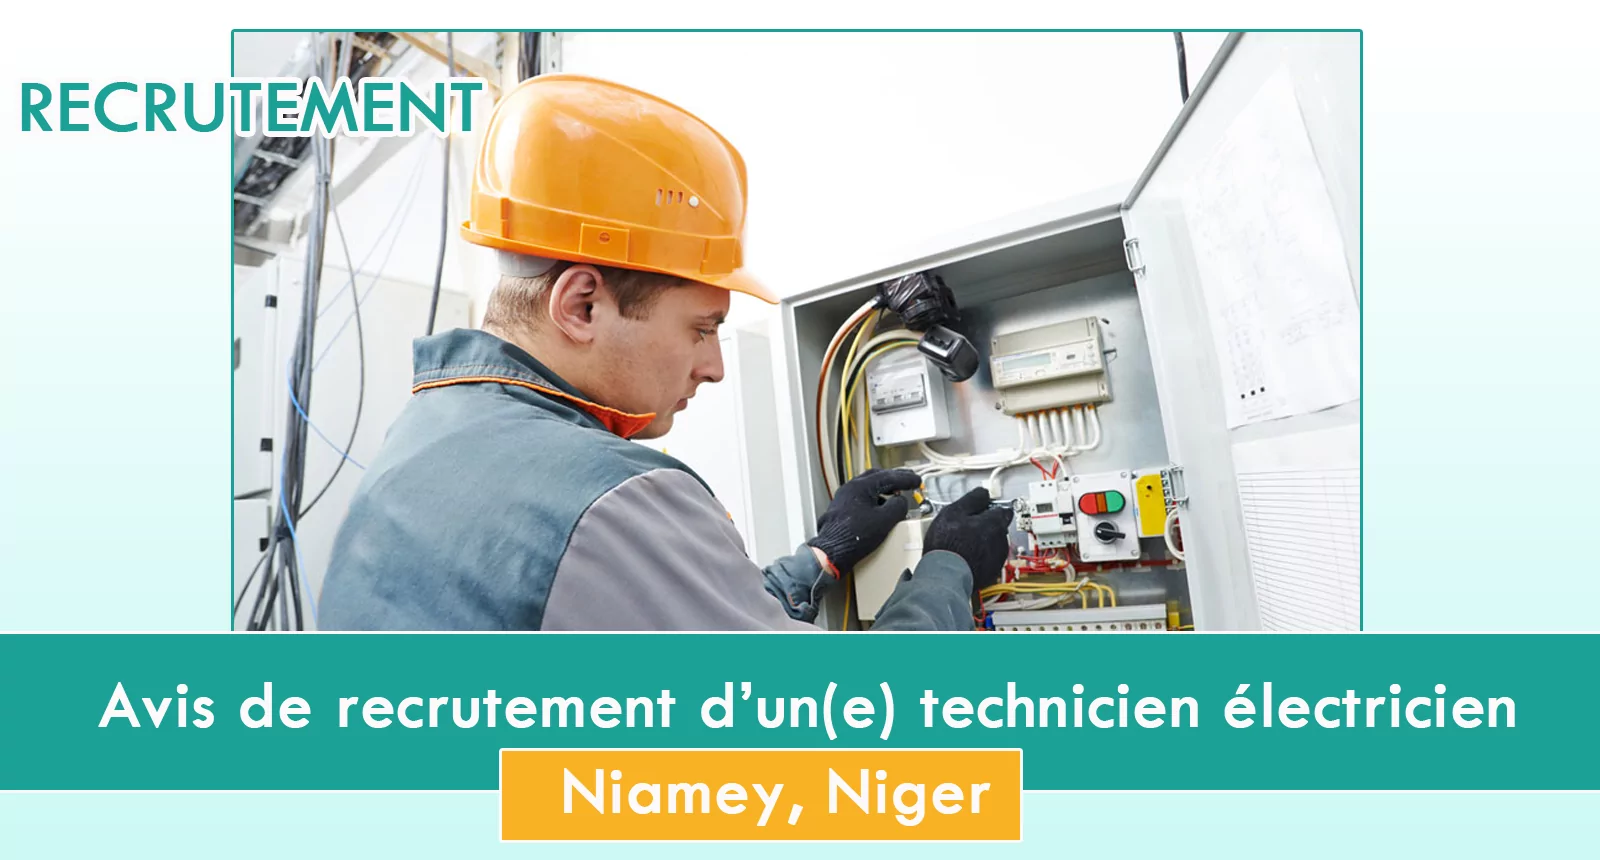 Avis de recrutement d’un(e) technicien électricien, Niamey, Niger